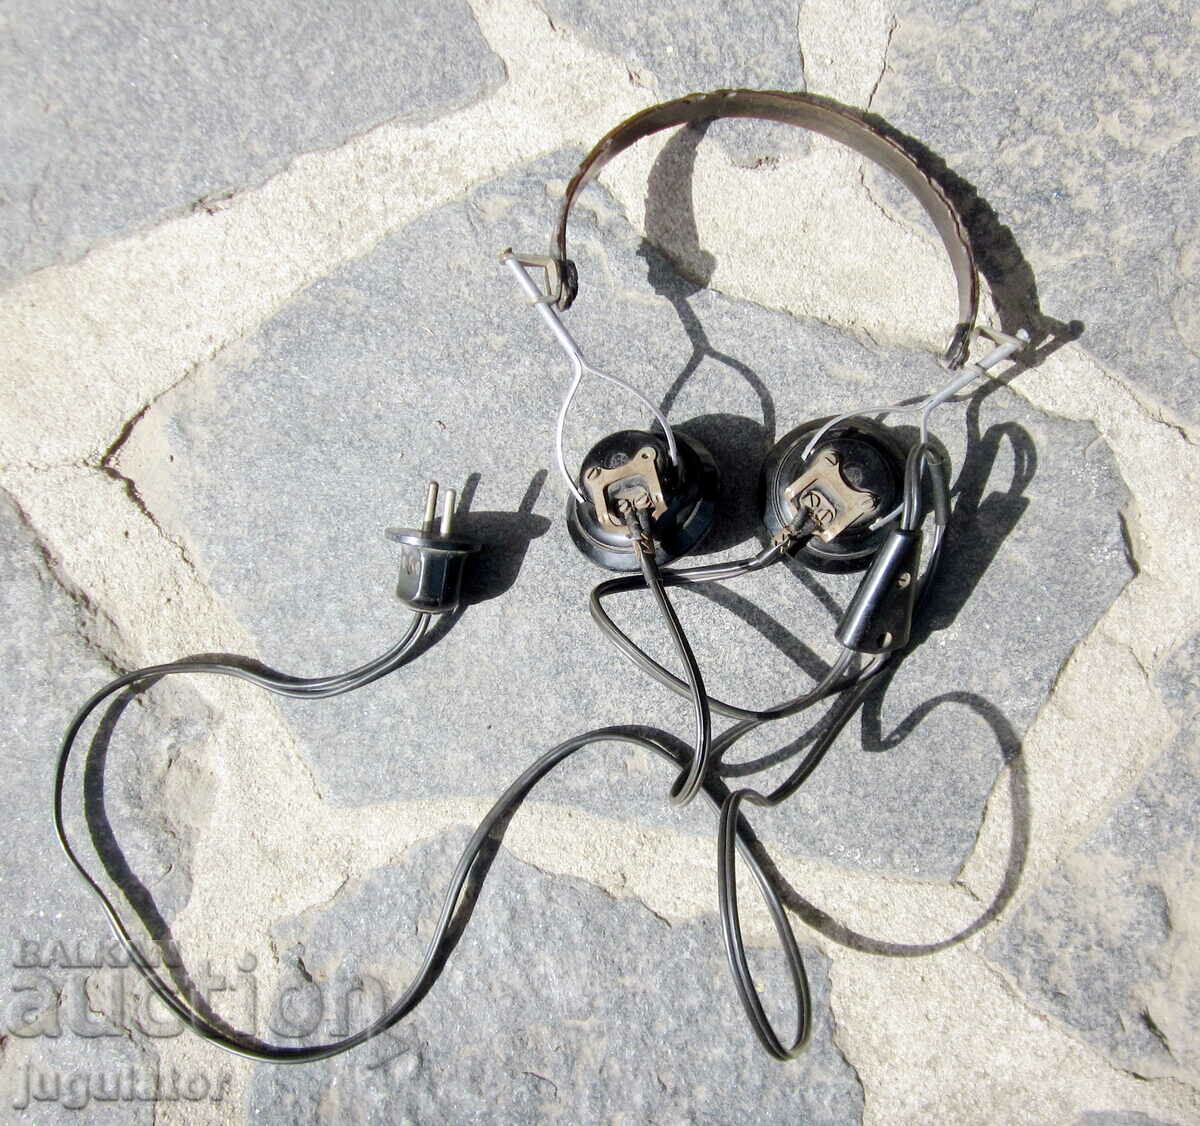 old radio headphones for a radio station